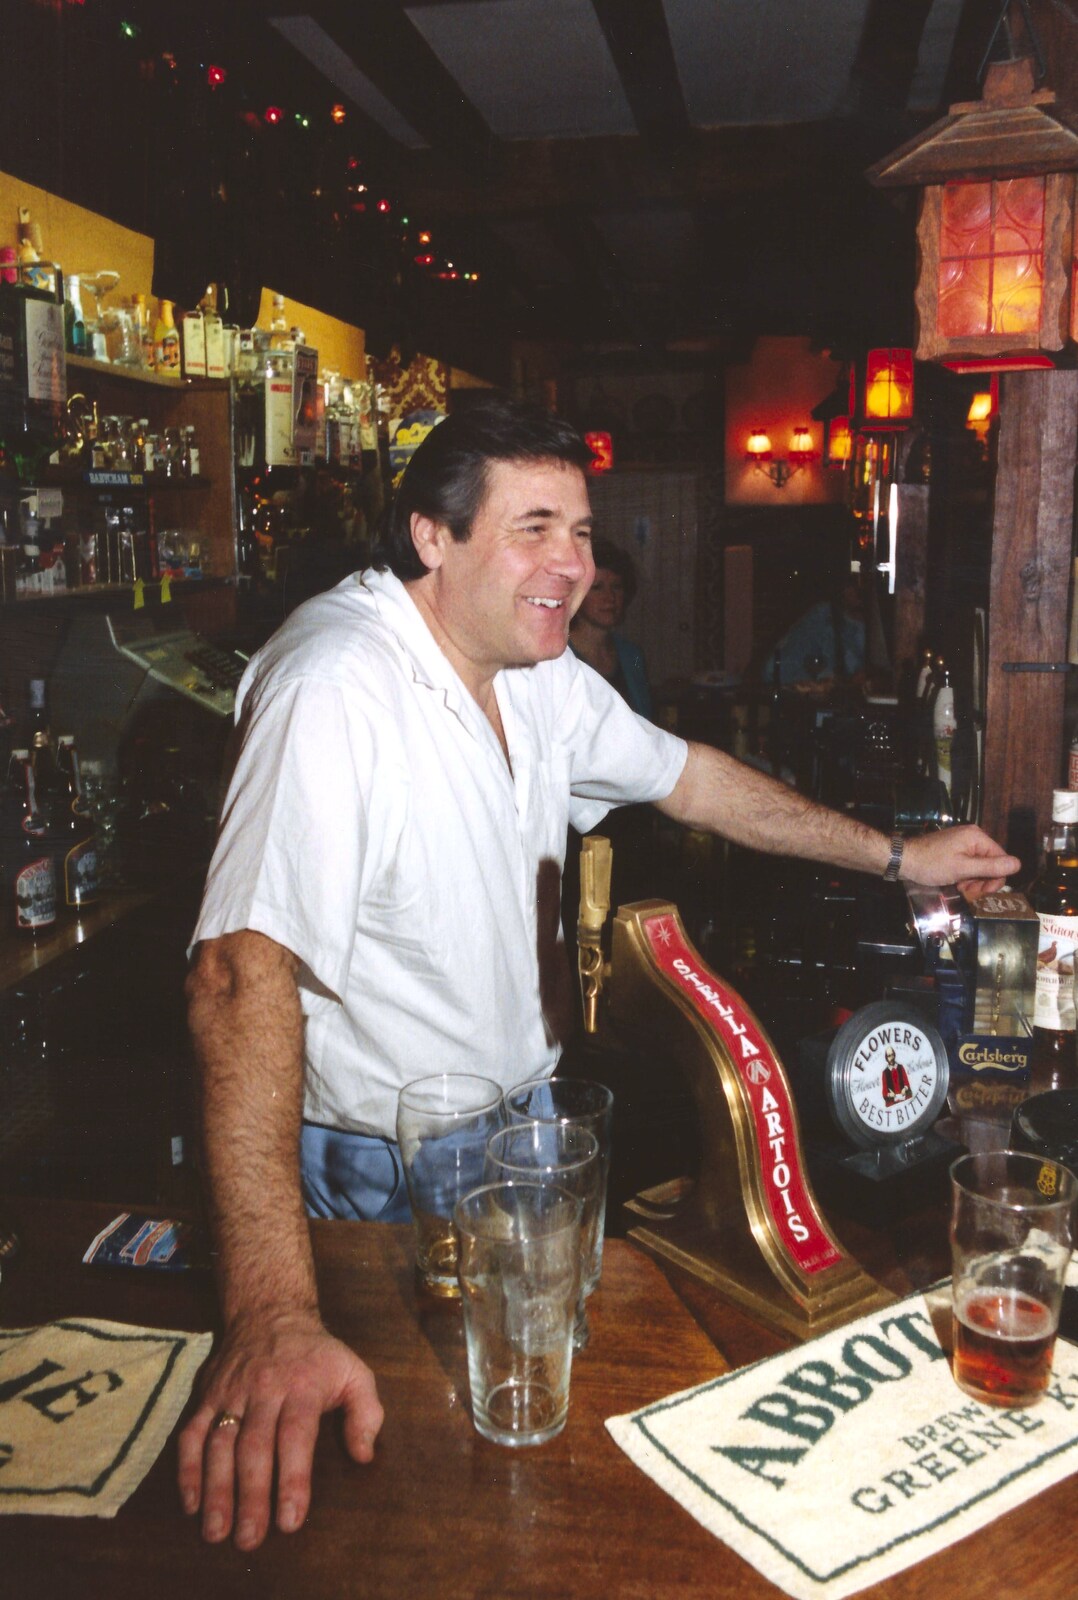 BPCC Printec Reunion at The Brome Swan, Suffolk - 20th February 1991: Alan behind the bar